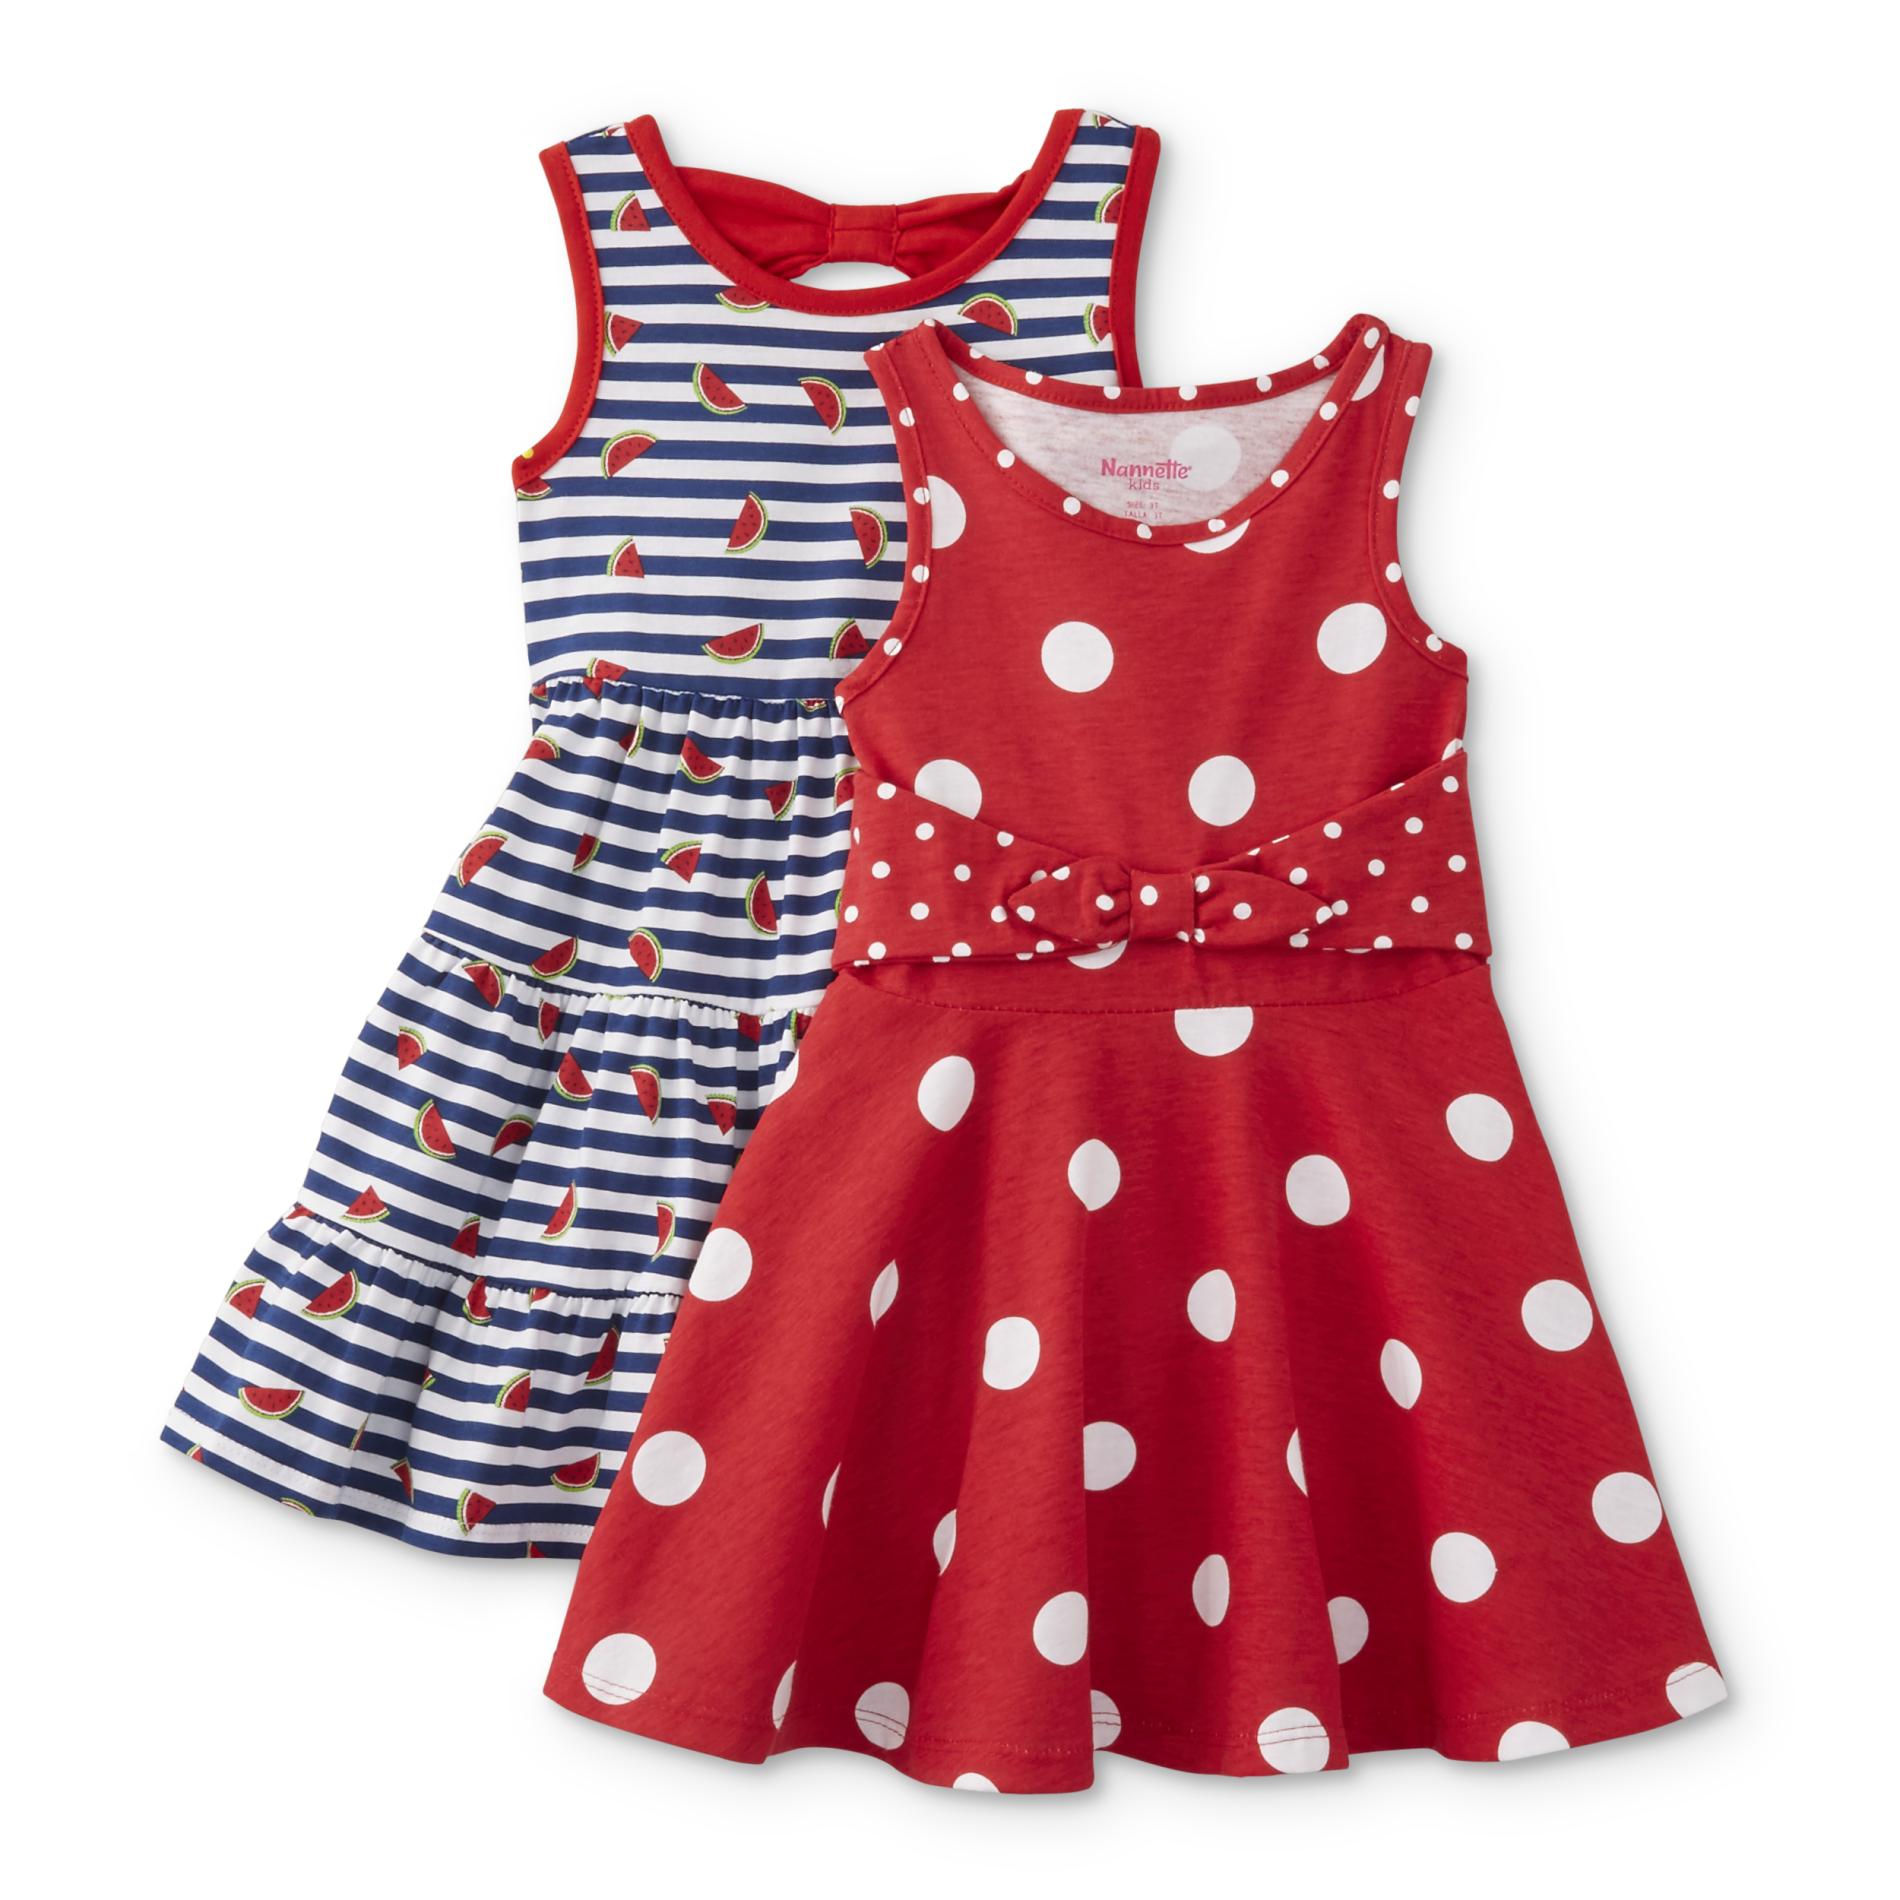 Toddler Girls' 2-Pack Dresses - Dots & Watermelon